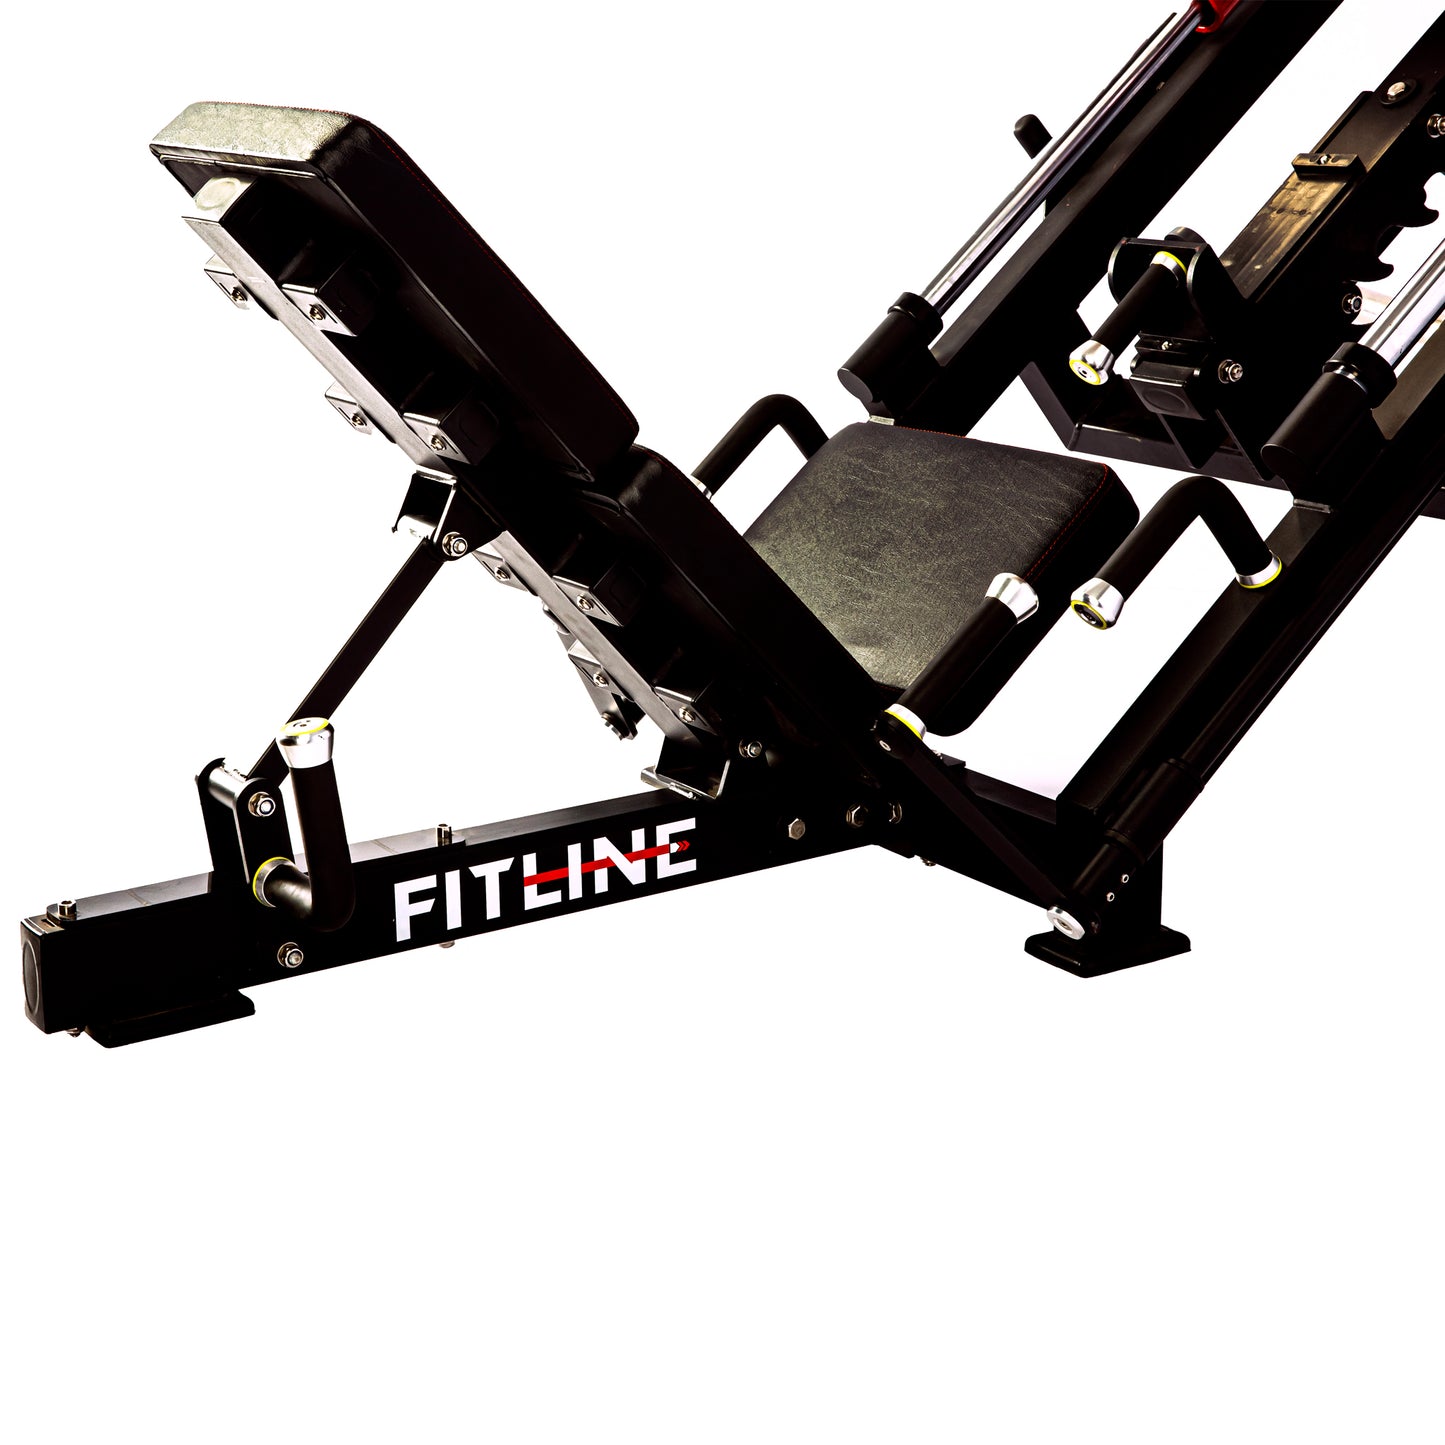 FitLine - 45 DEGREE LEG PRESS - Top Brands Fitness Equipment